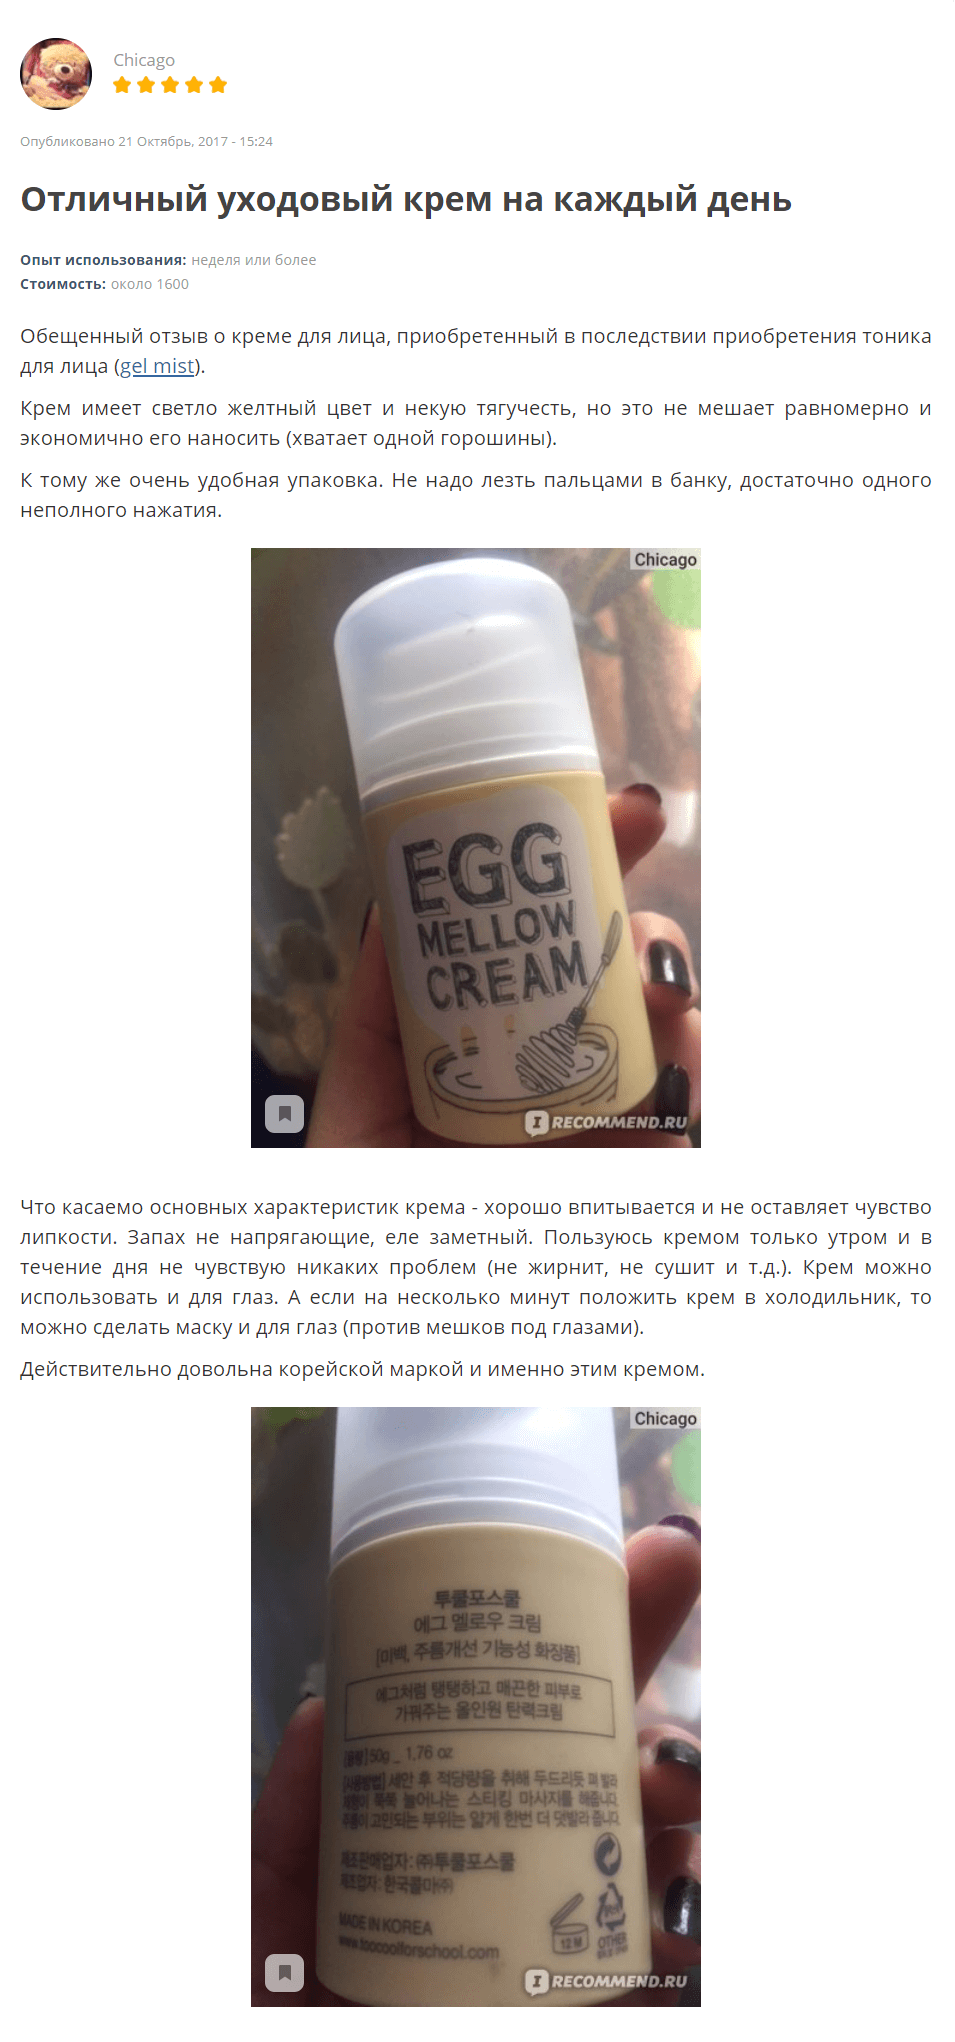 Egg Mellow Cream [Too Cool For School] отзыв 2 (1)